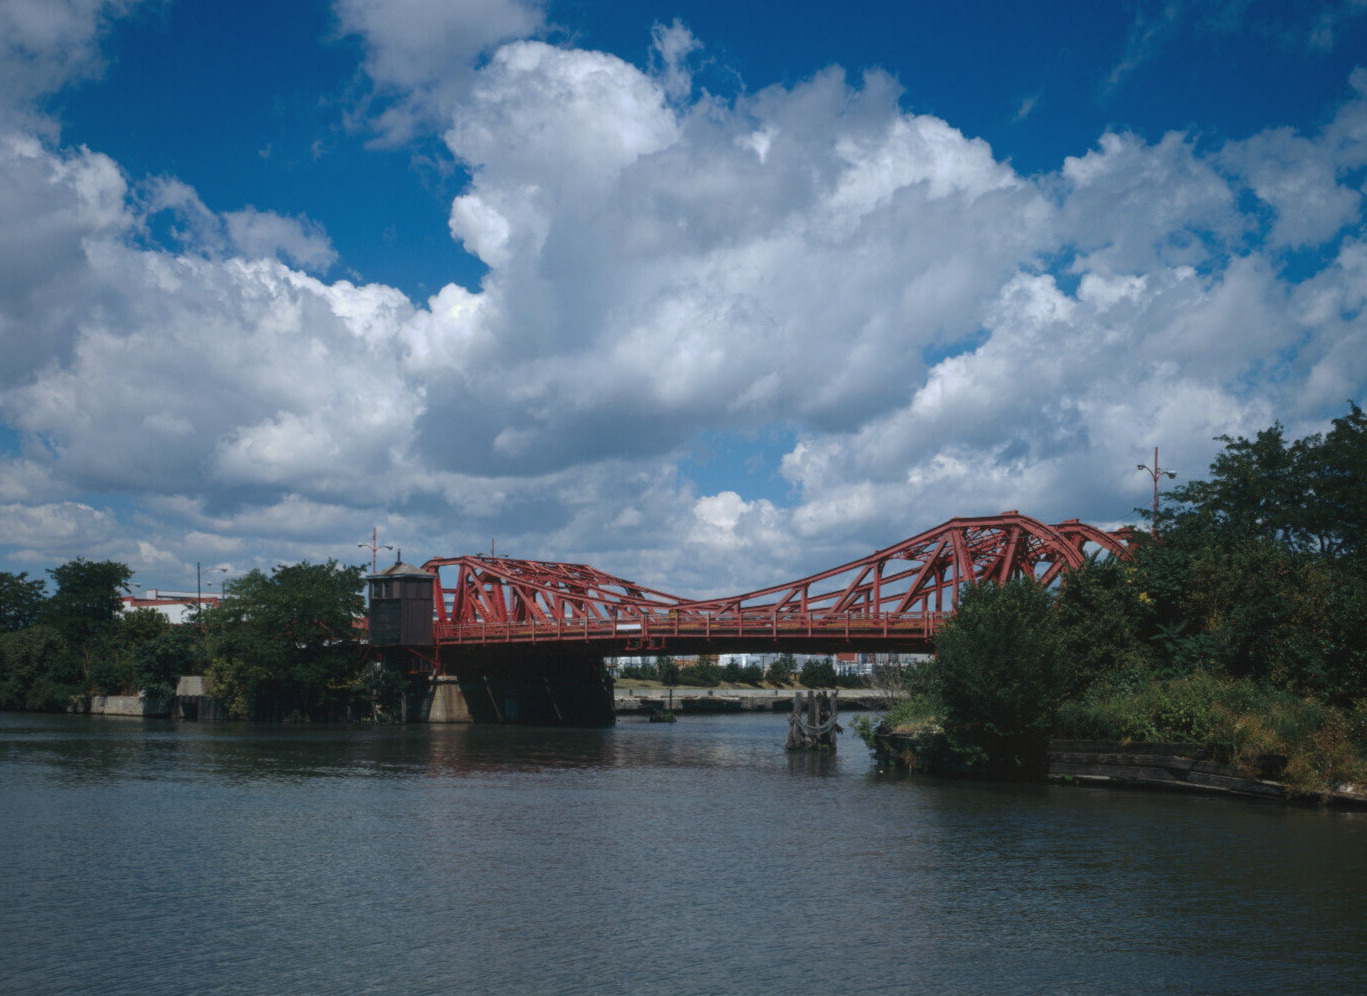 1968 North Avenue Bridge, Spanning North Branch of Chicago River